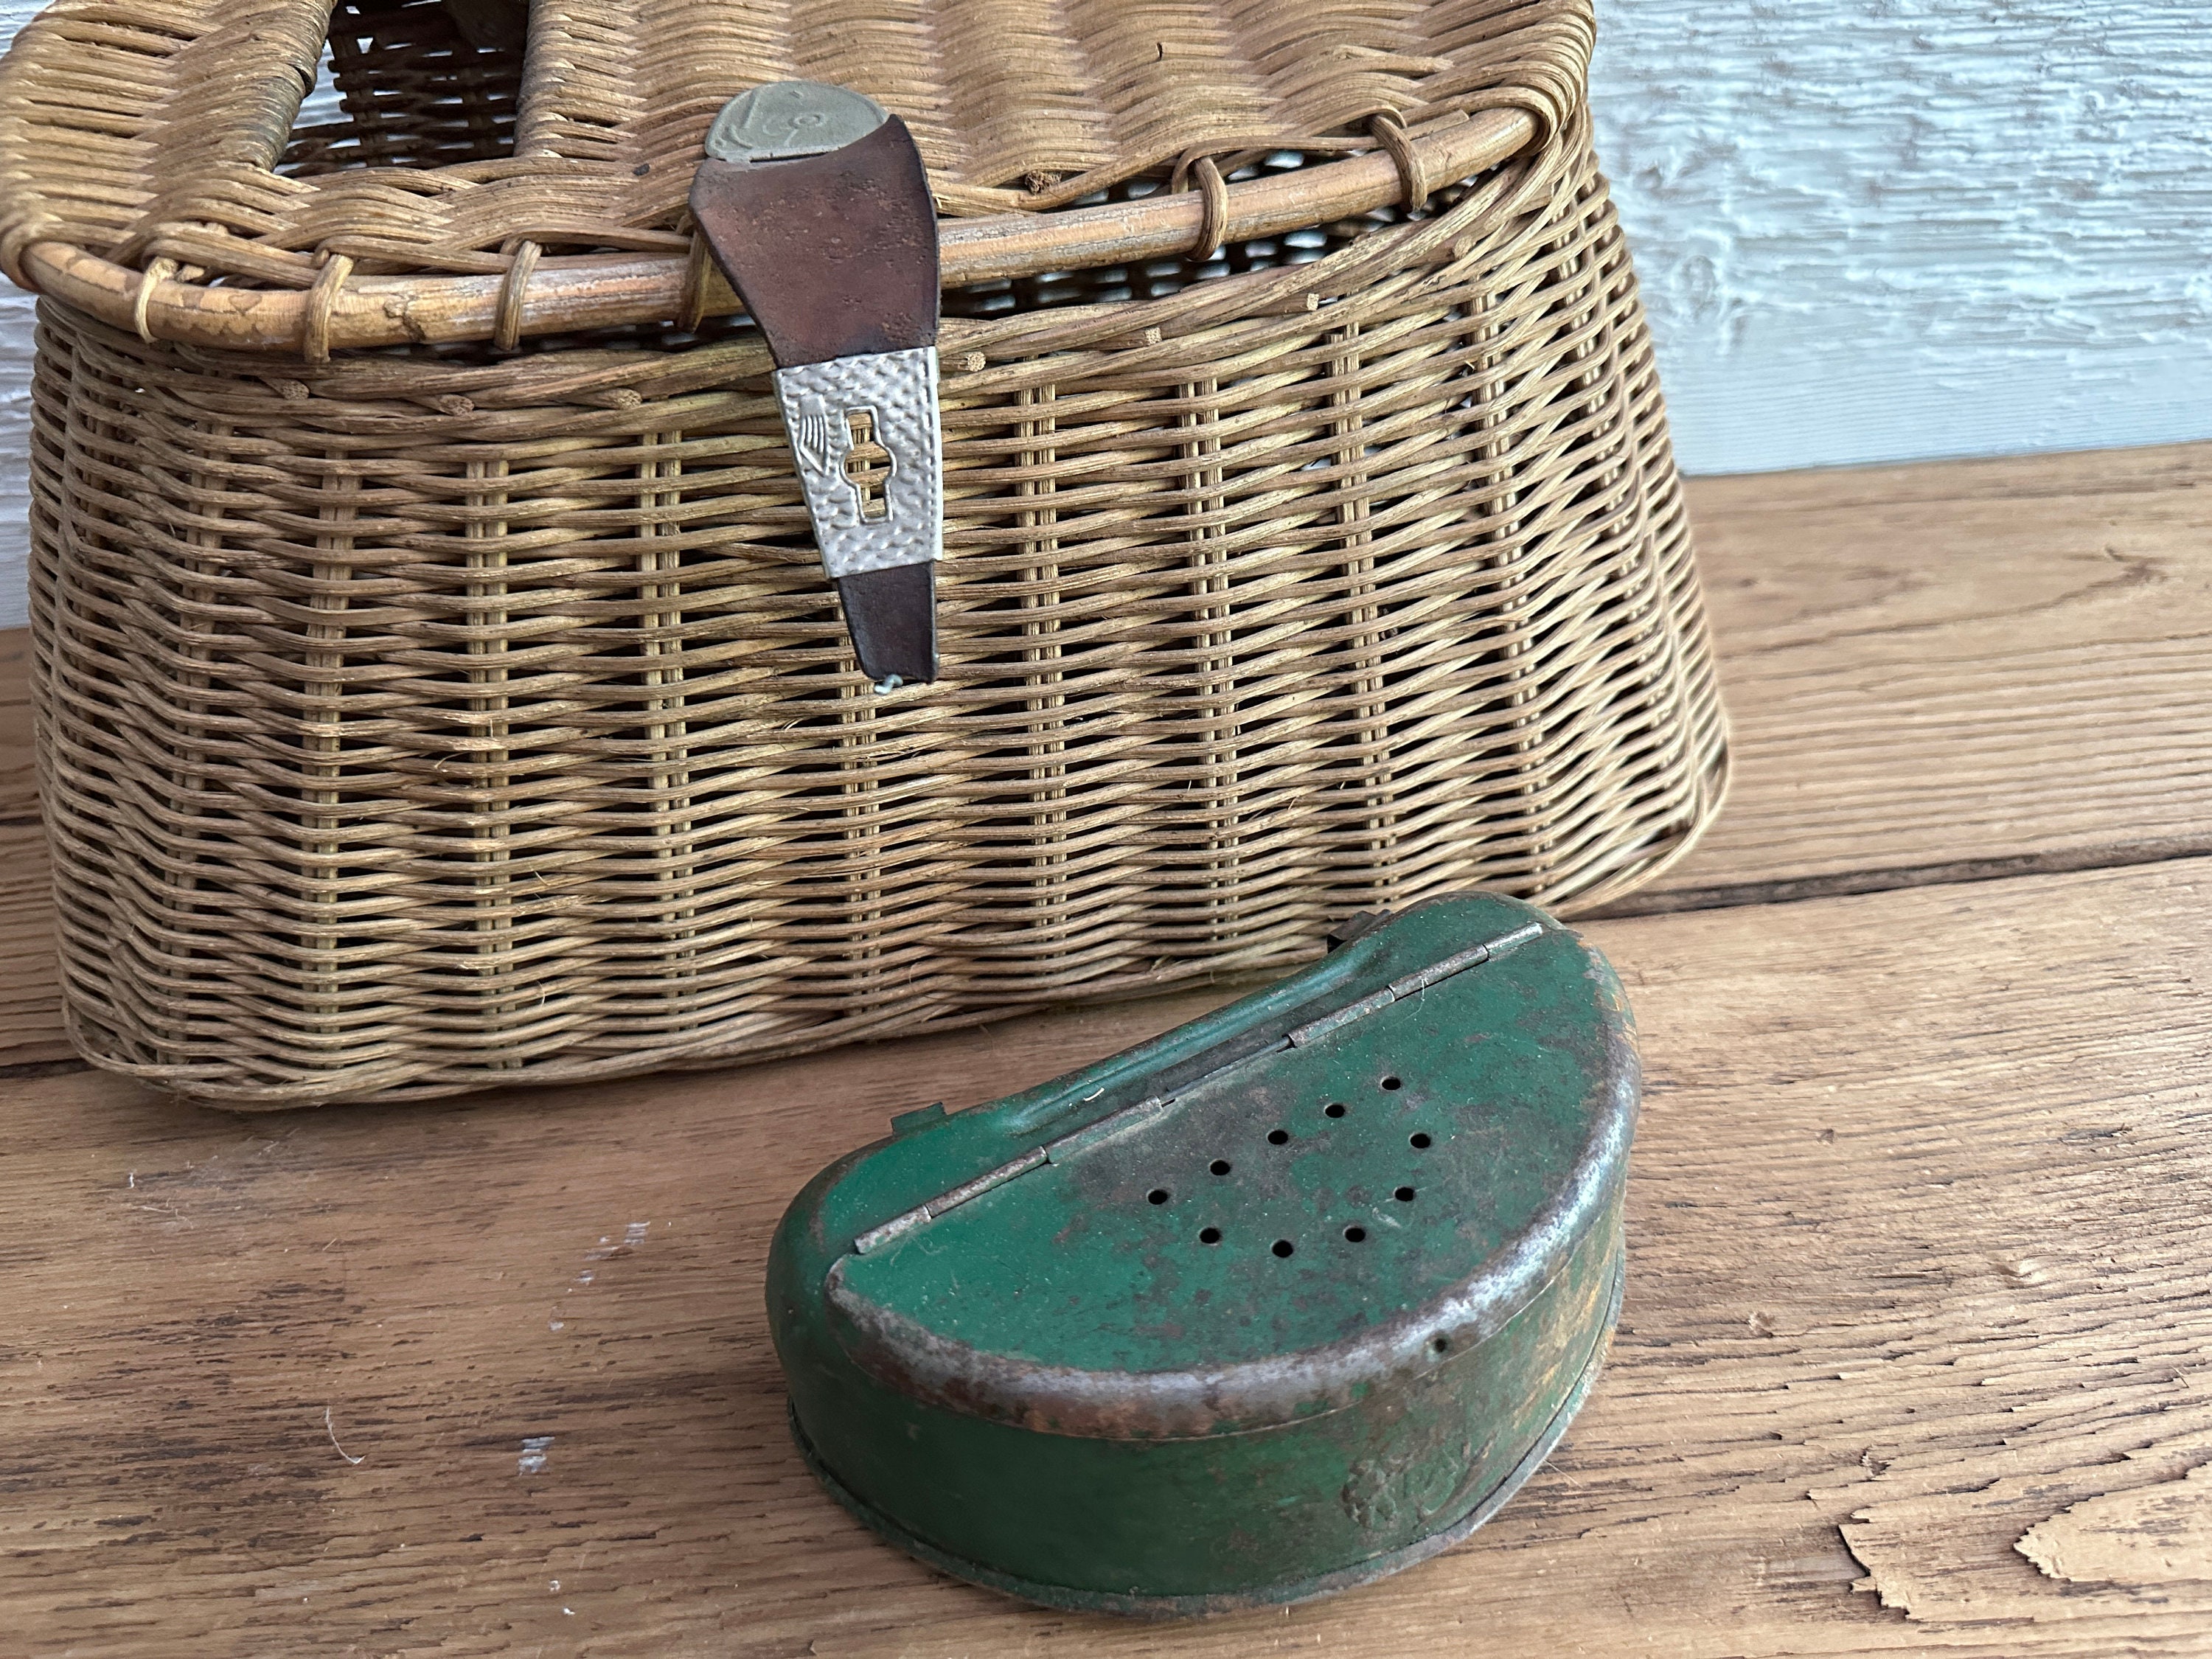 Vintage Wicker Fishing Creel Basket, Fly Fisherman Basket With Old